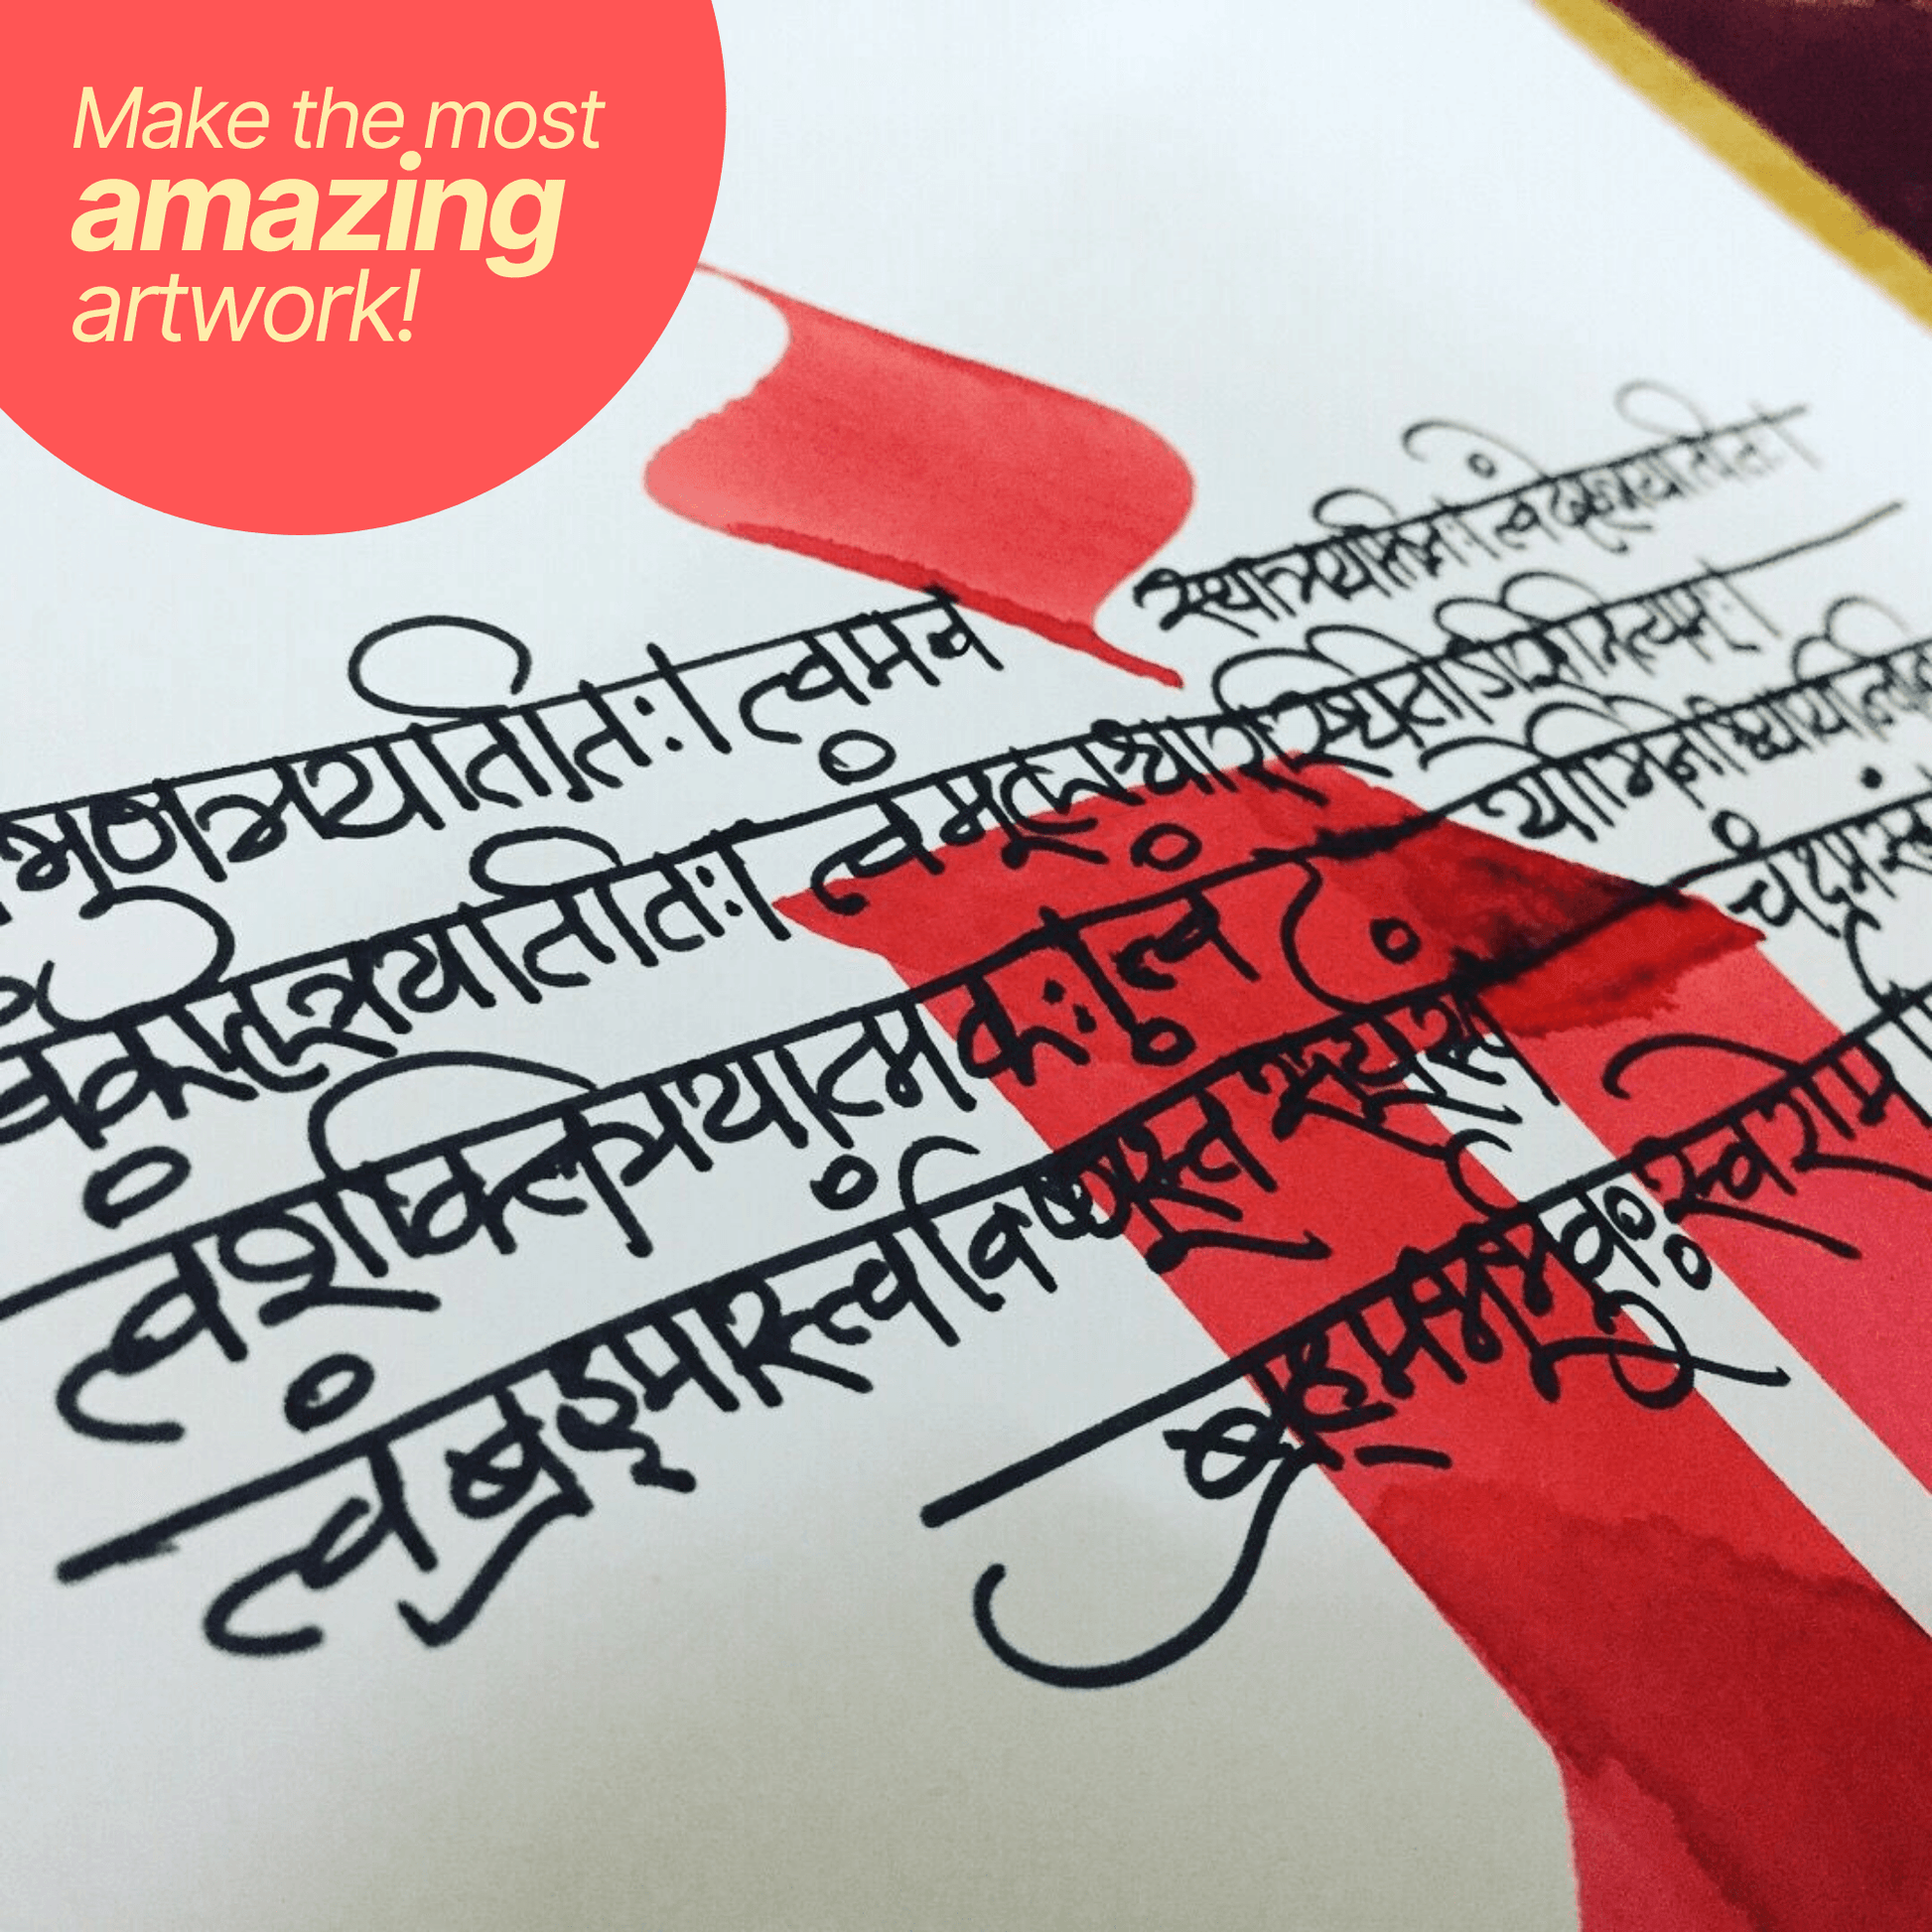 DIY Devanagari Calligraphy Kit